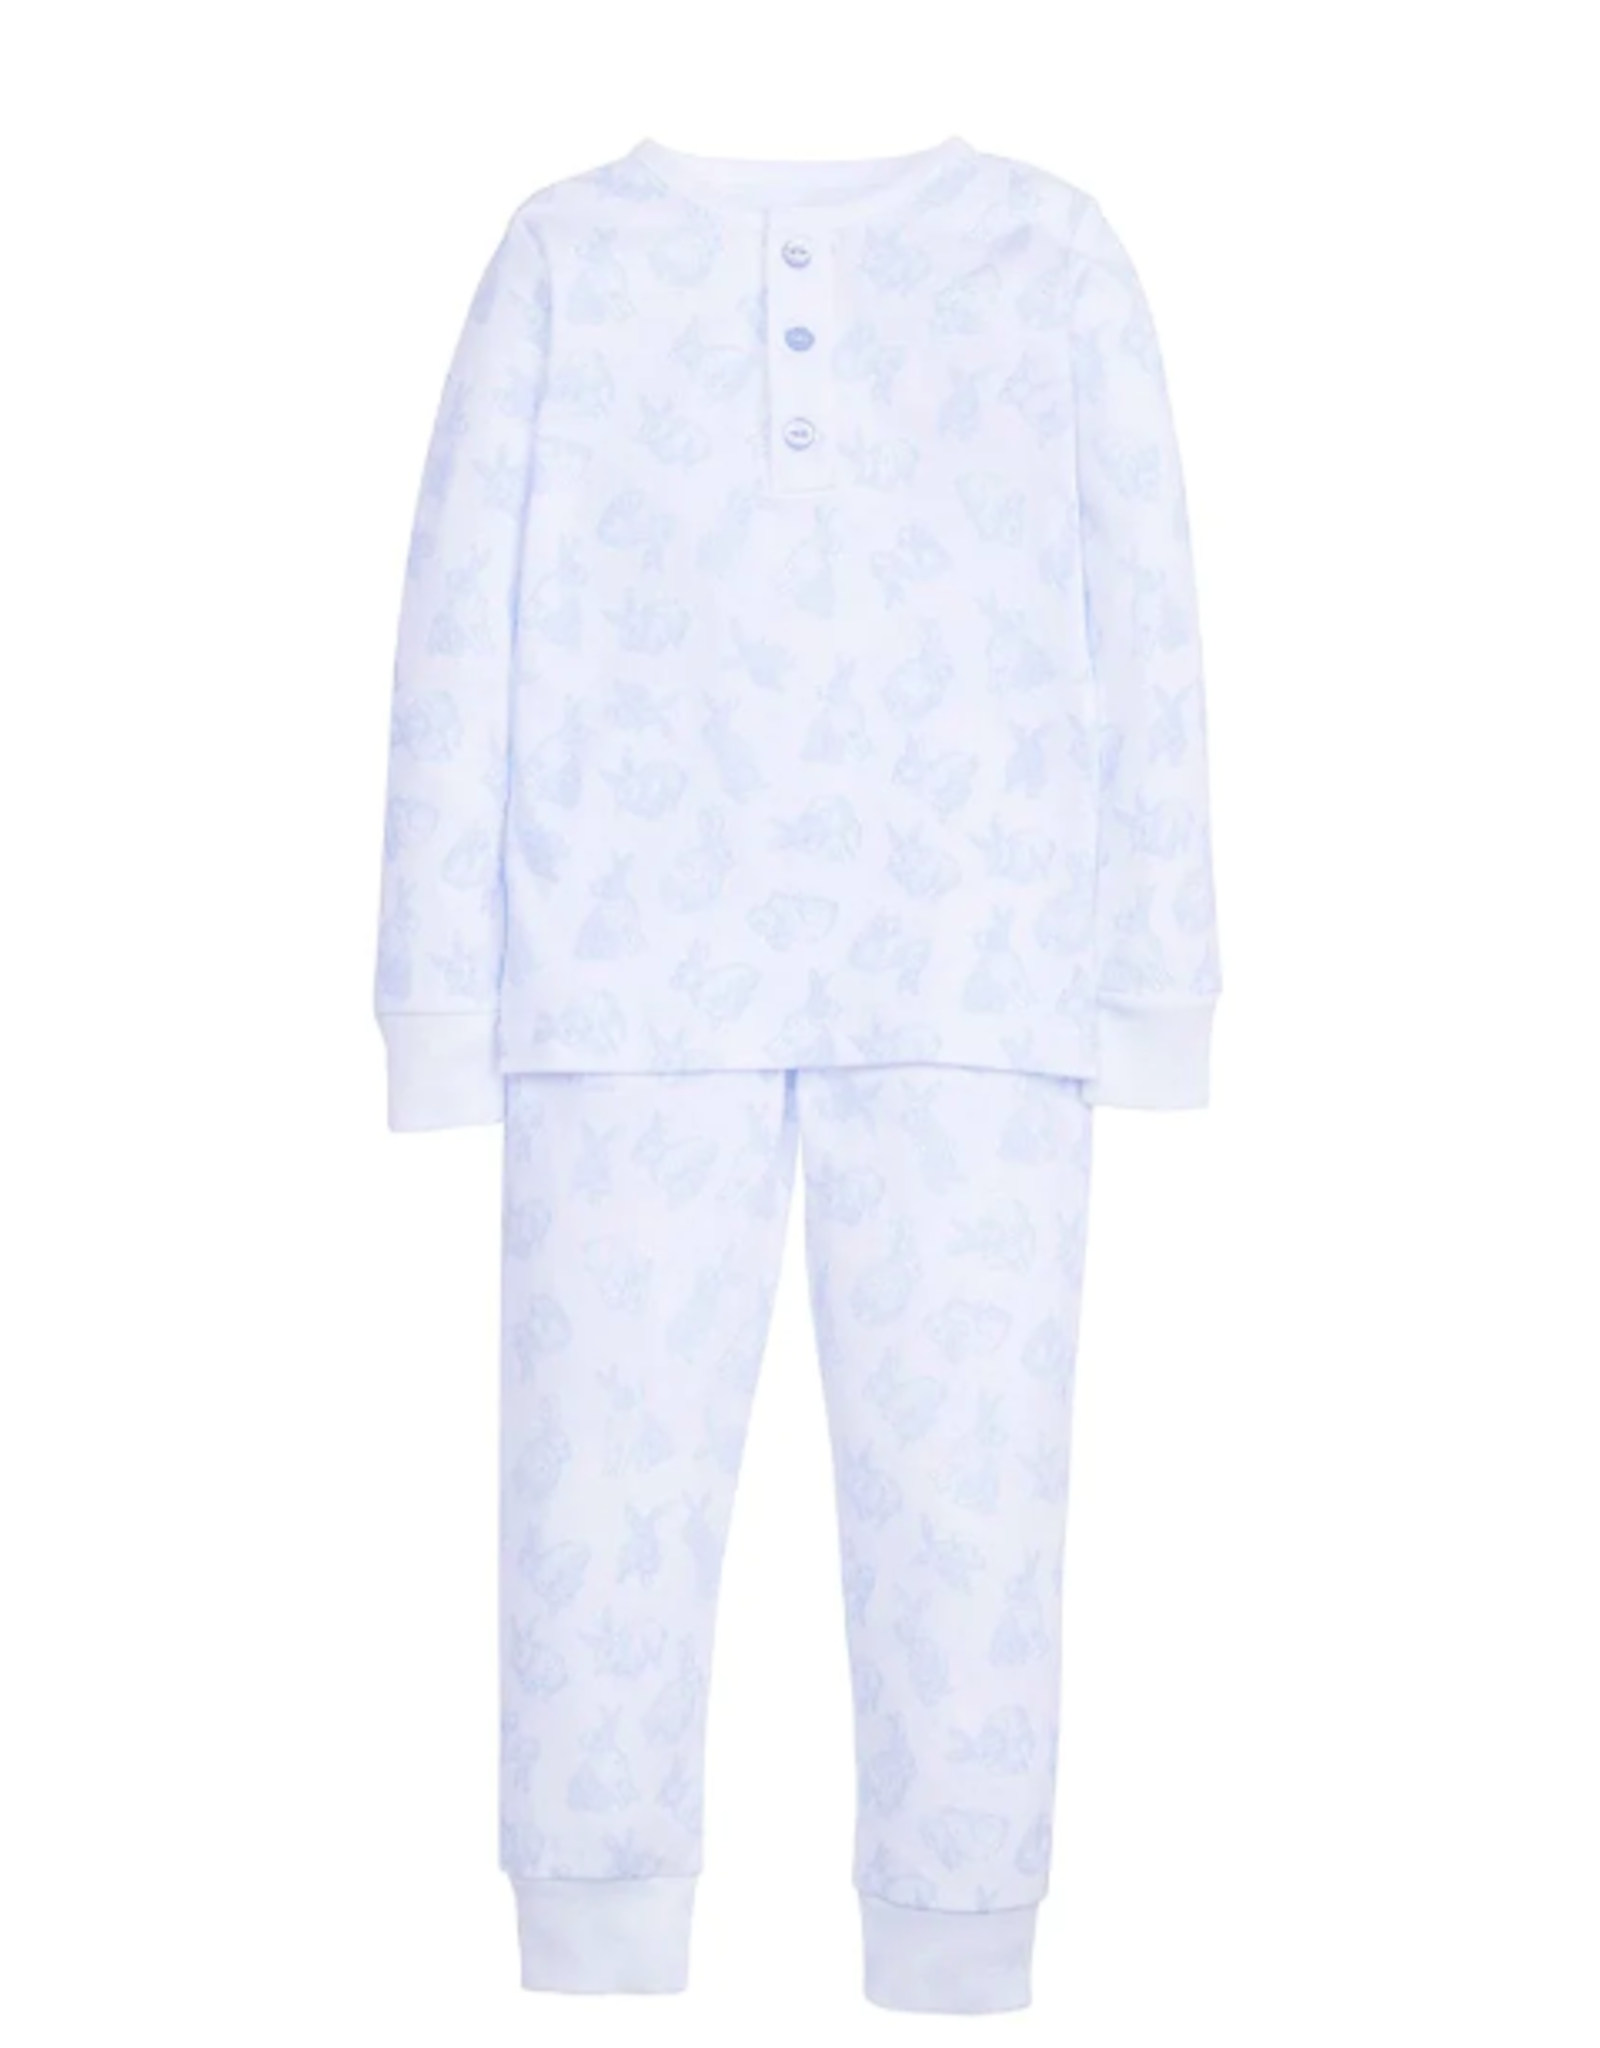 Thomas Boy's Blue/White Striped Pajamas - Powell Craft – Mudpie San  Francisco